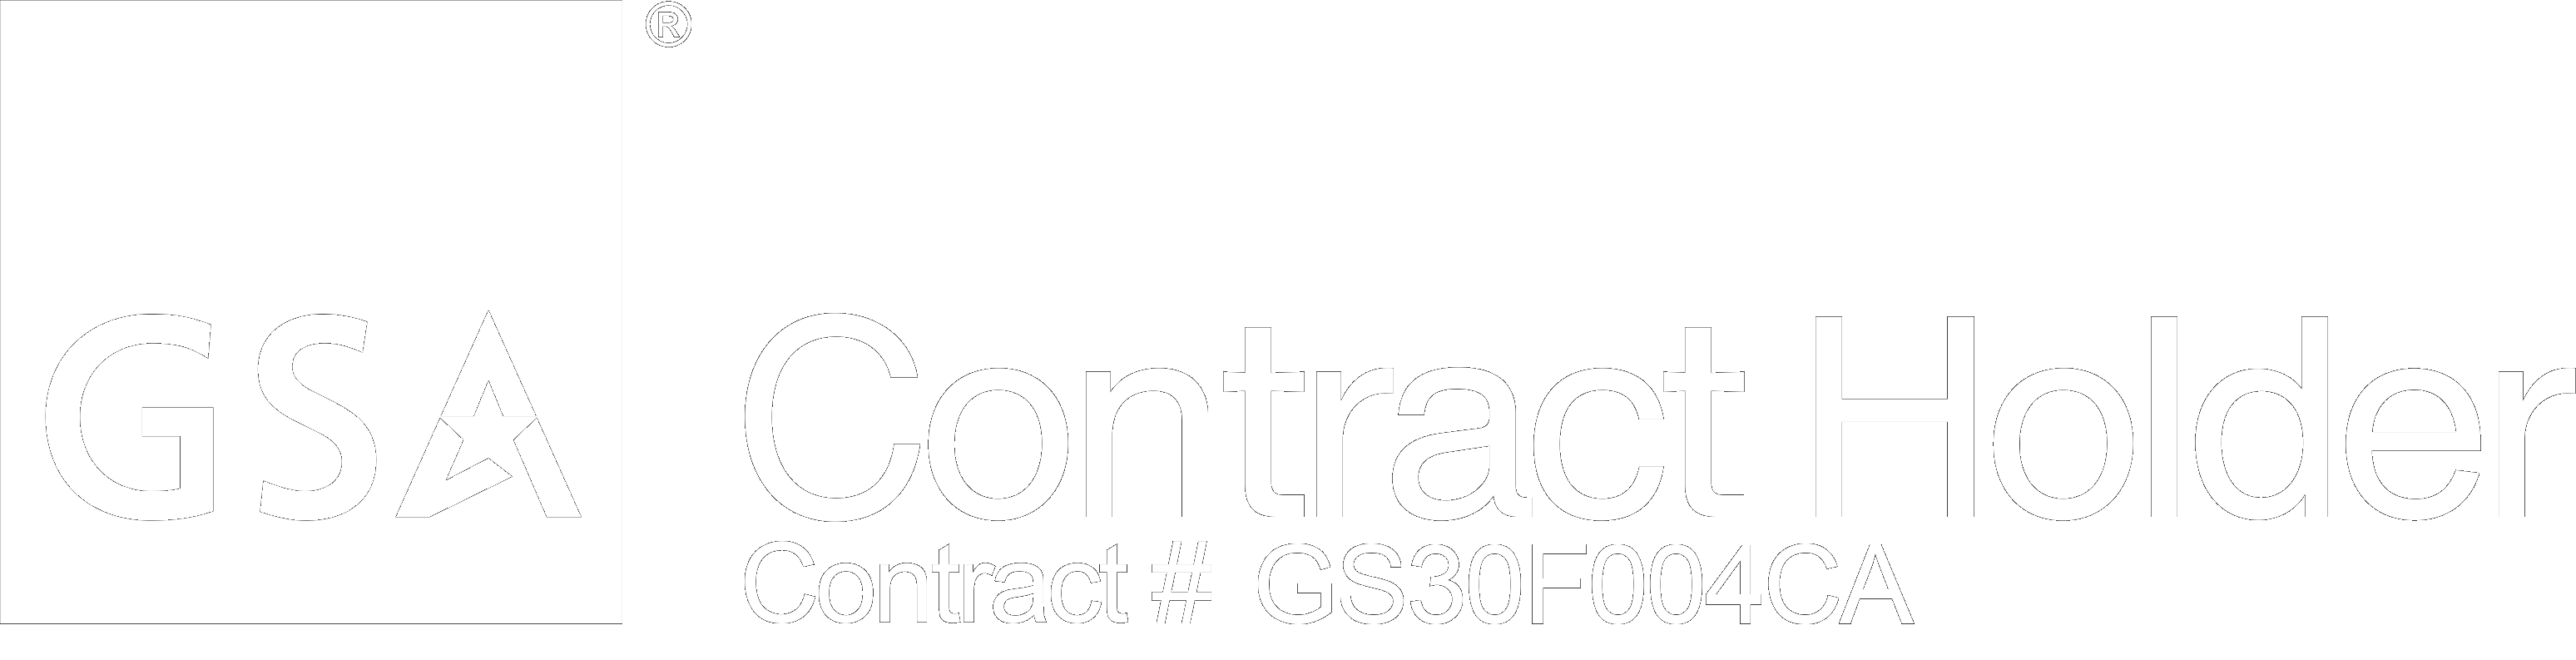 GSA Contract Holder #GS30F004CA